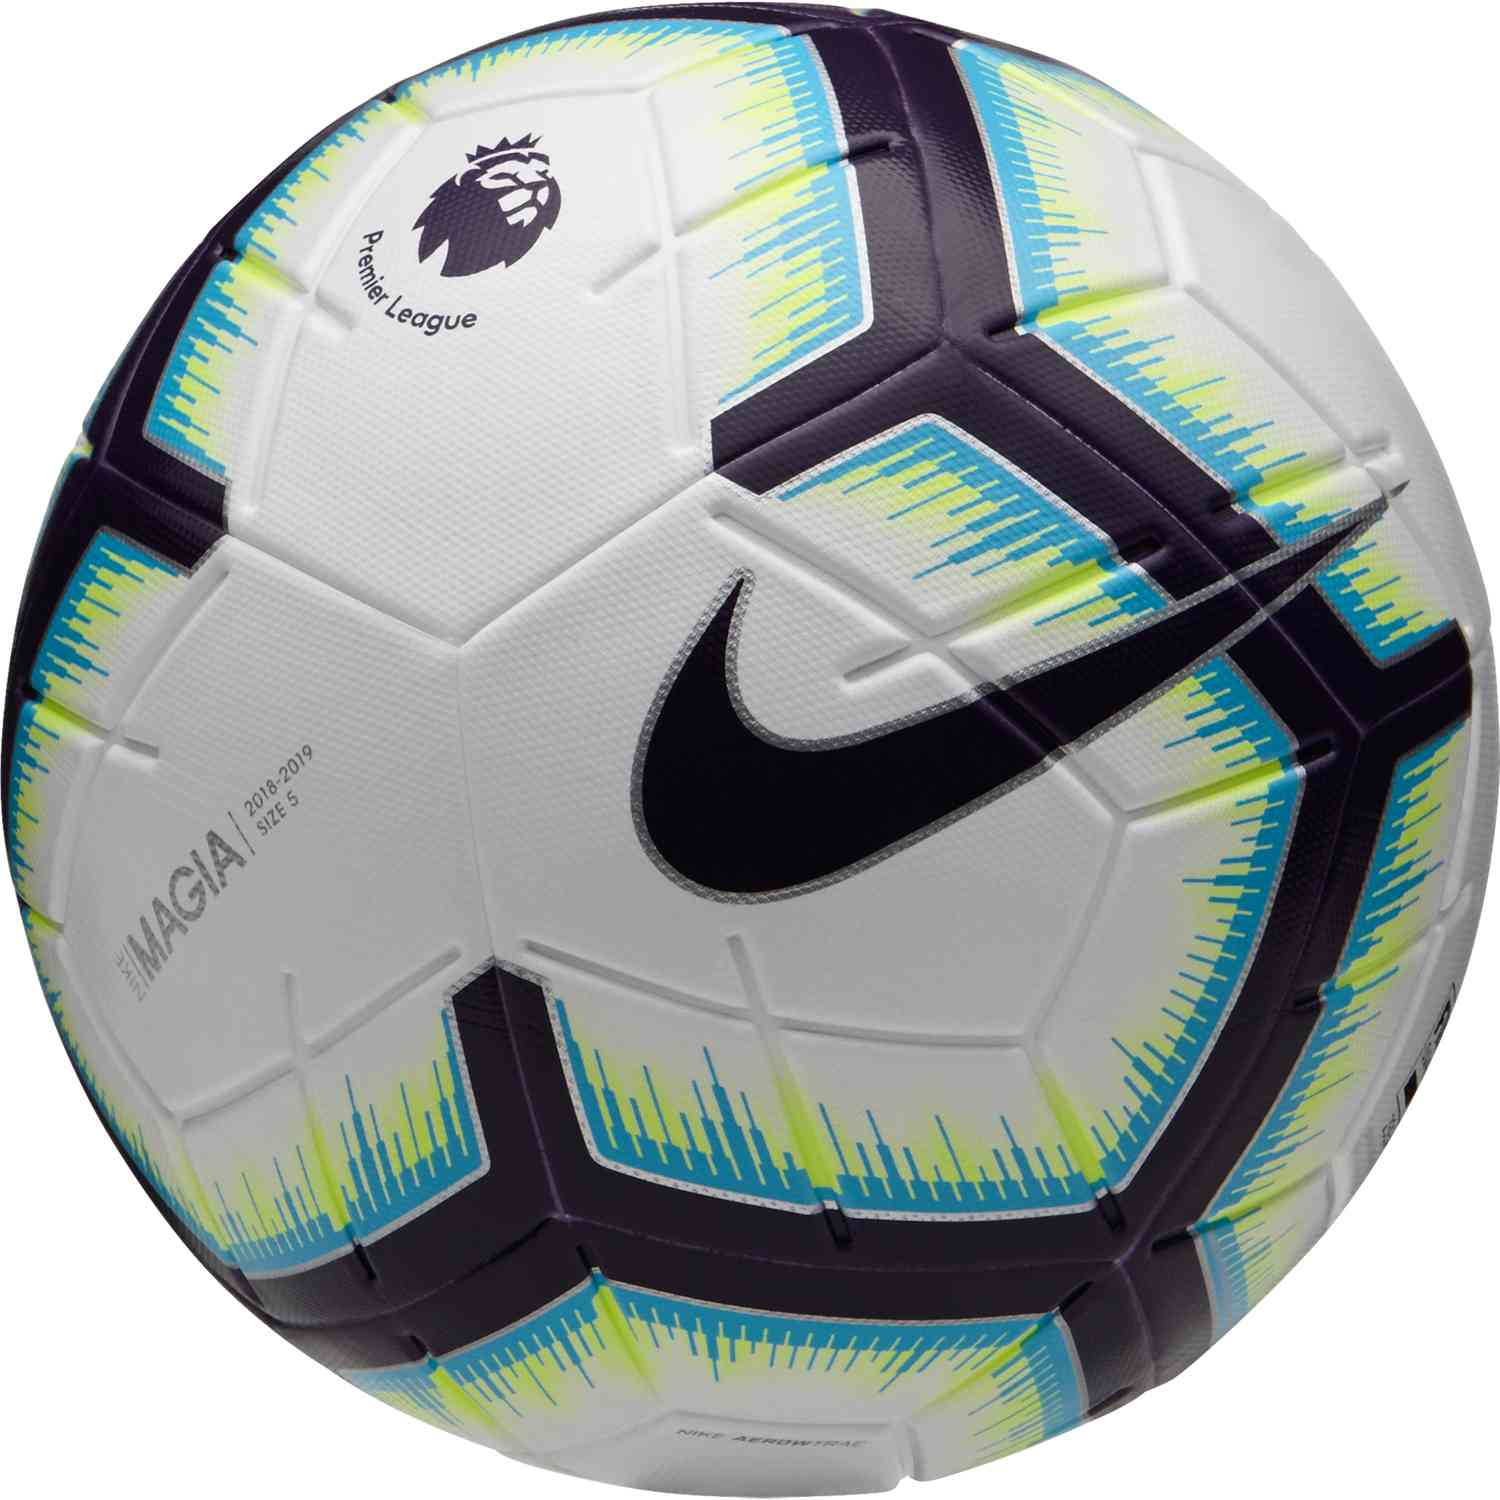 Nike Premier League Magia Match Soccer Ball - White/Blue/Purple - SoccerPro